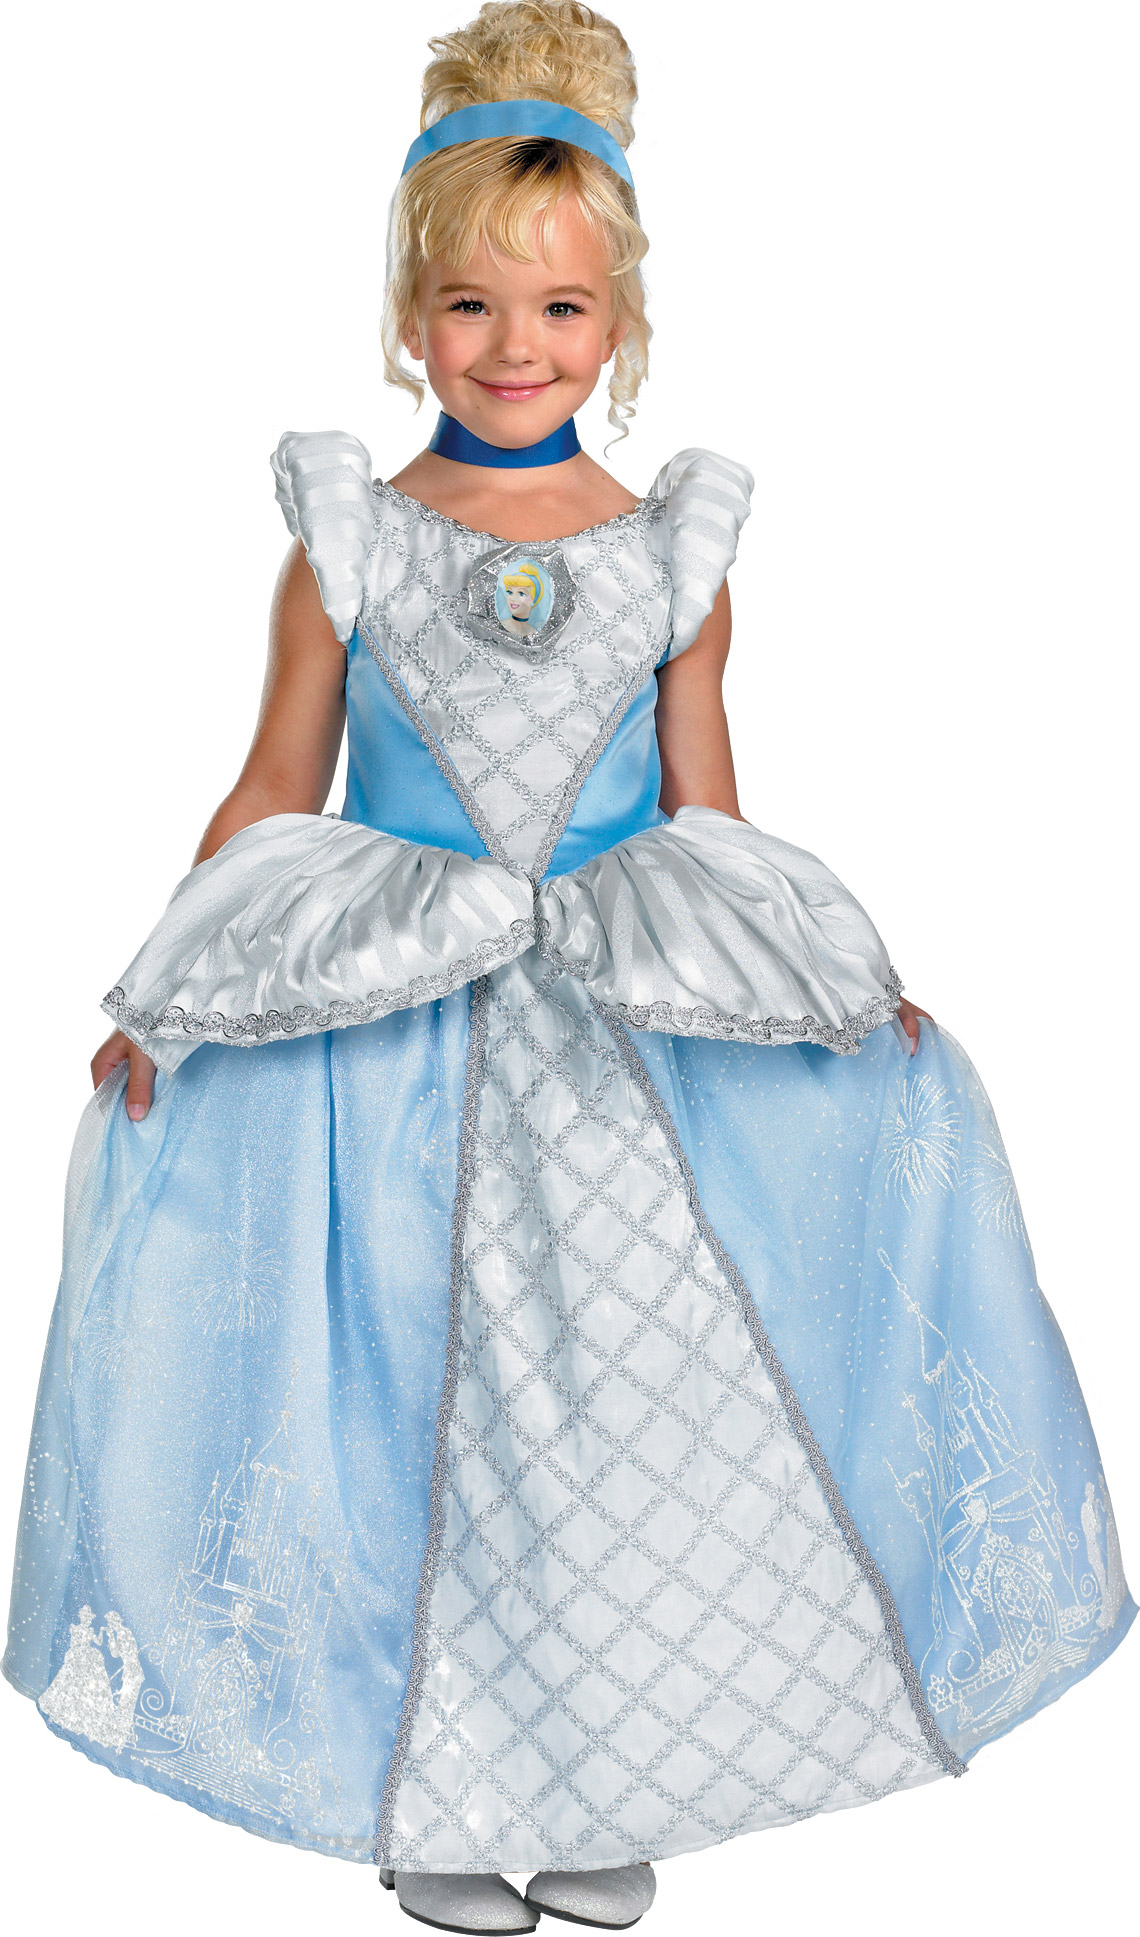 Cinderella Dresses for Little Girls – Fashion dresses